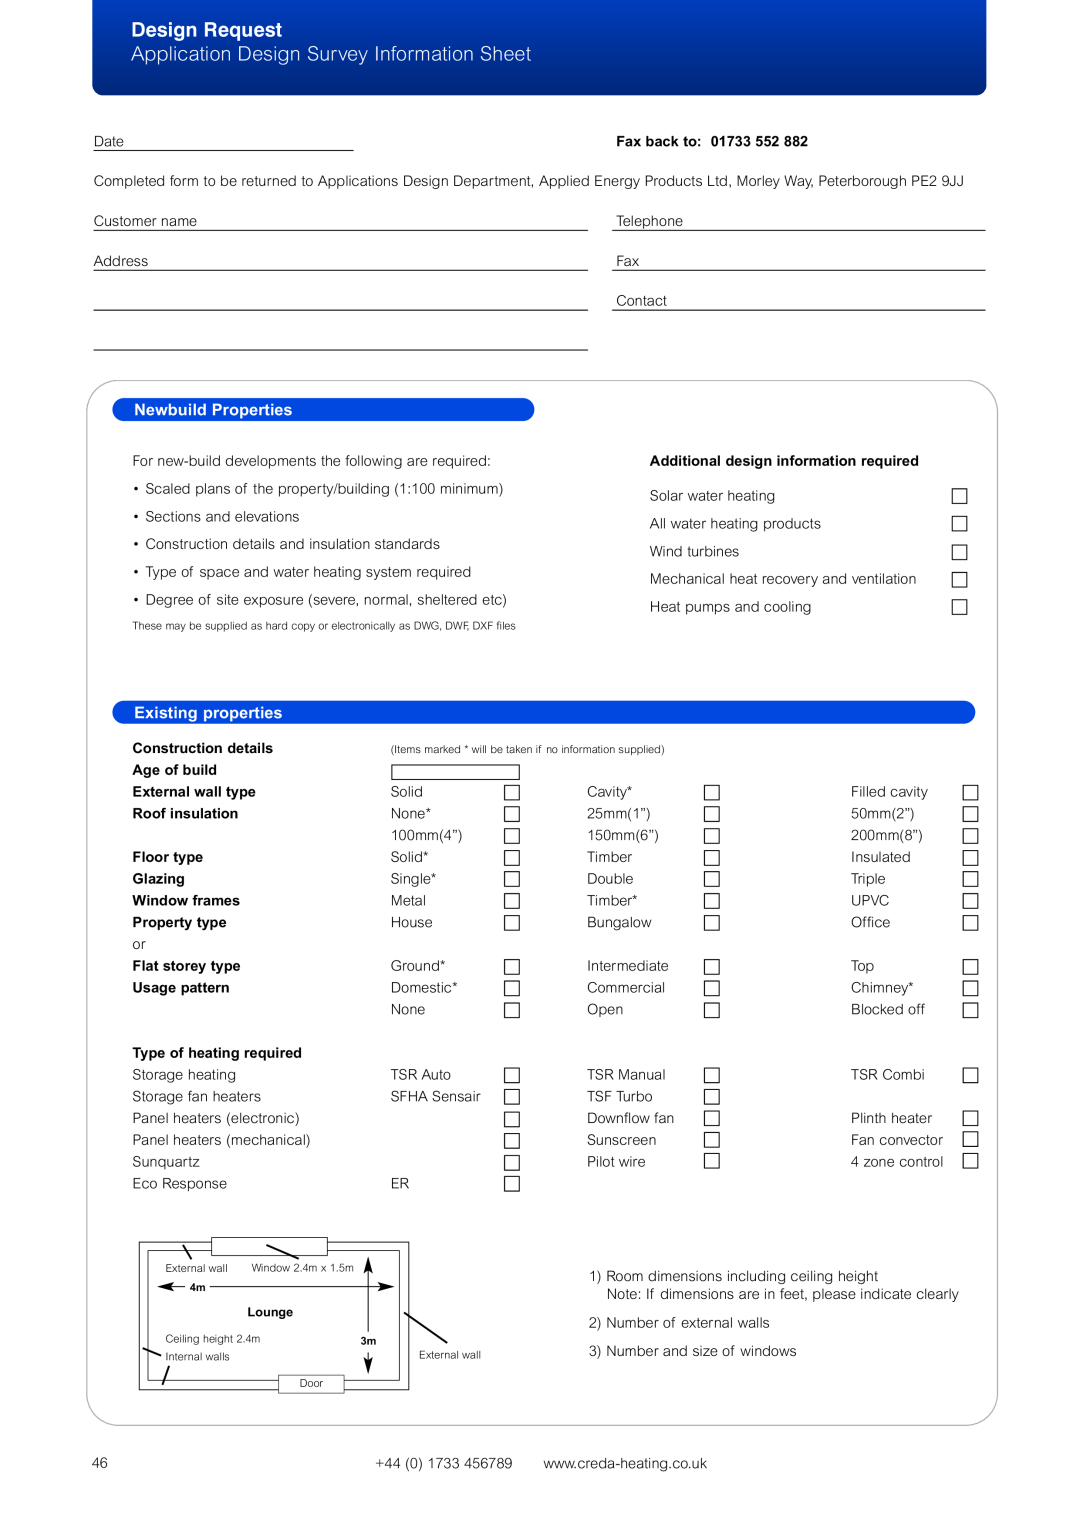 Creda Heating Solution manual Design Request, Application Design Survey Information Sheet, Newbuild Properties 